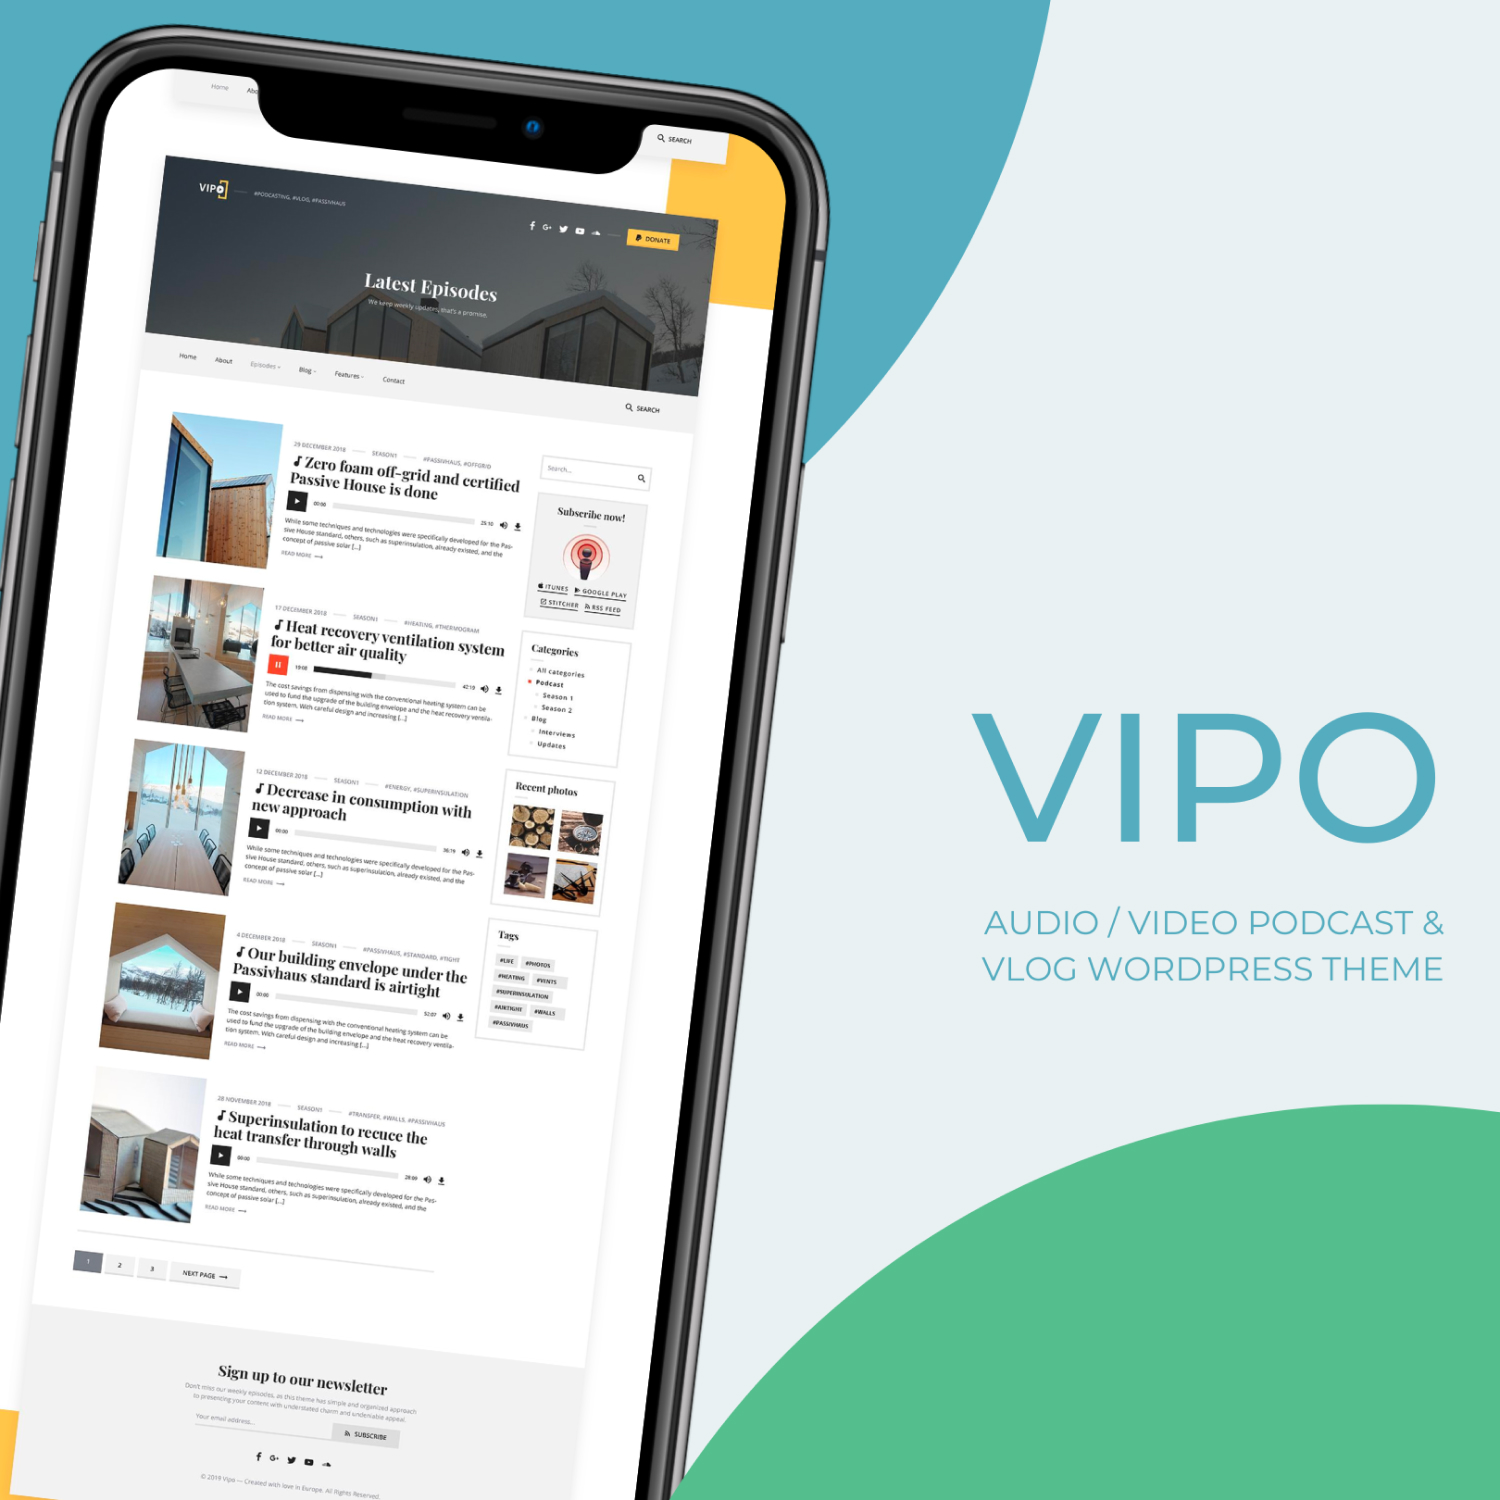 Vipo - Audio / Video Podcast & Vlog WordPress Theme.